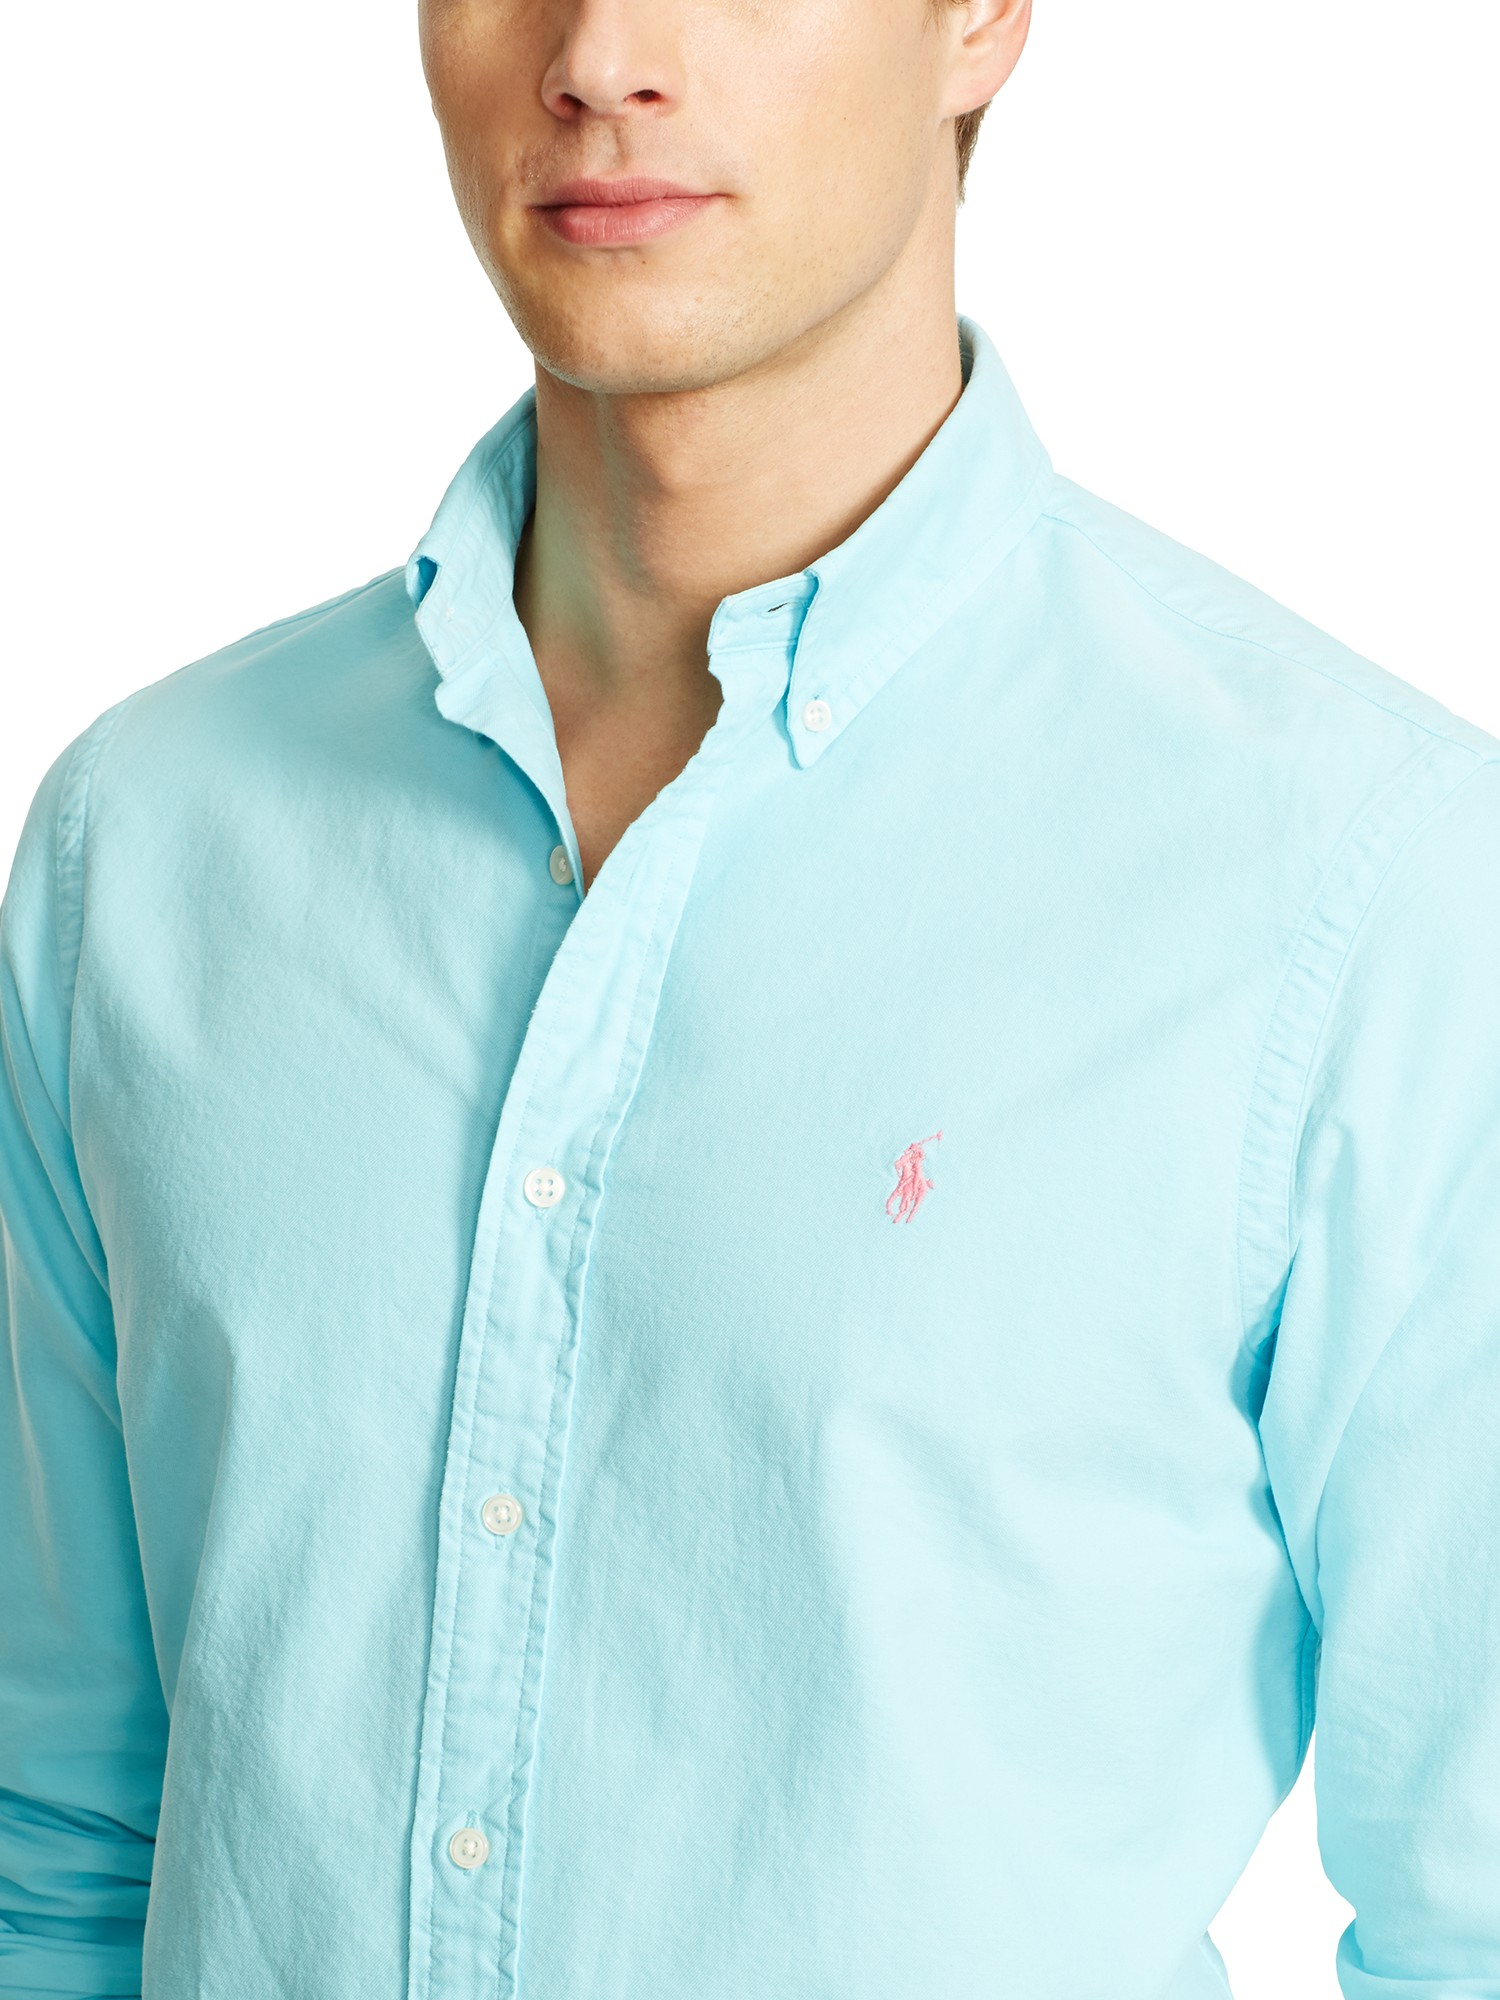 Polo Ralph Lauren Slim Fit Oxford Shirt in Blue for Men - Lyst